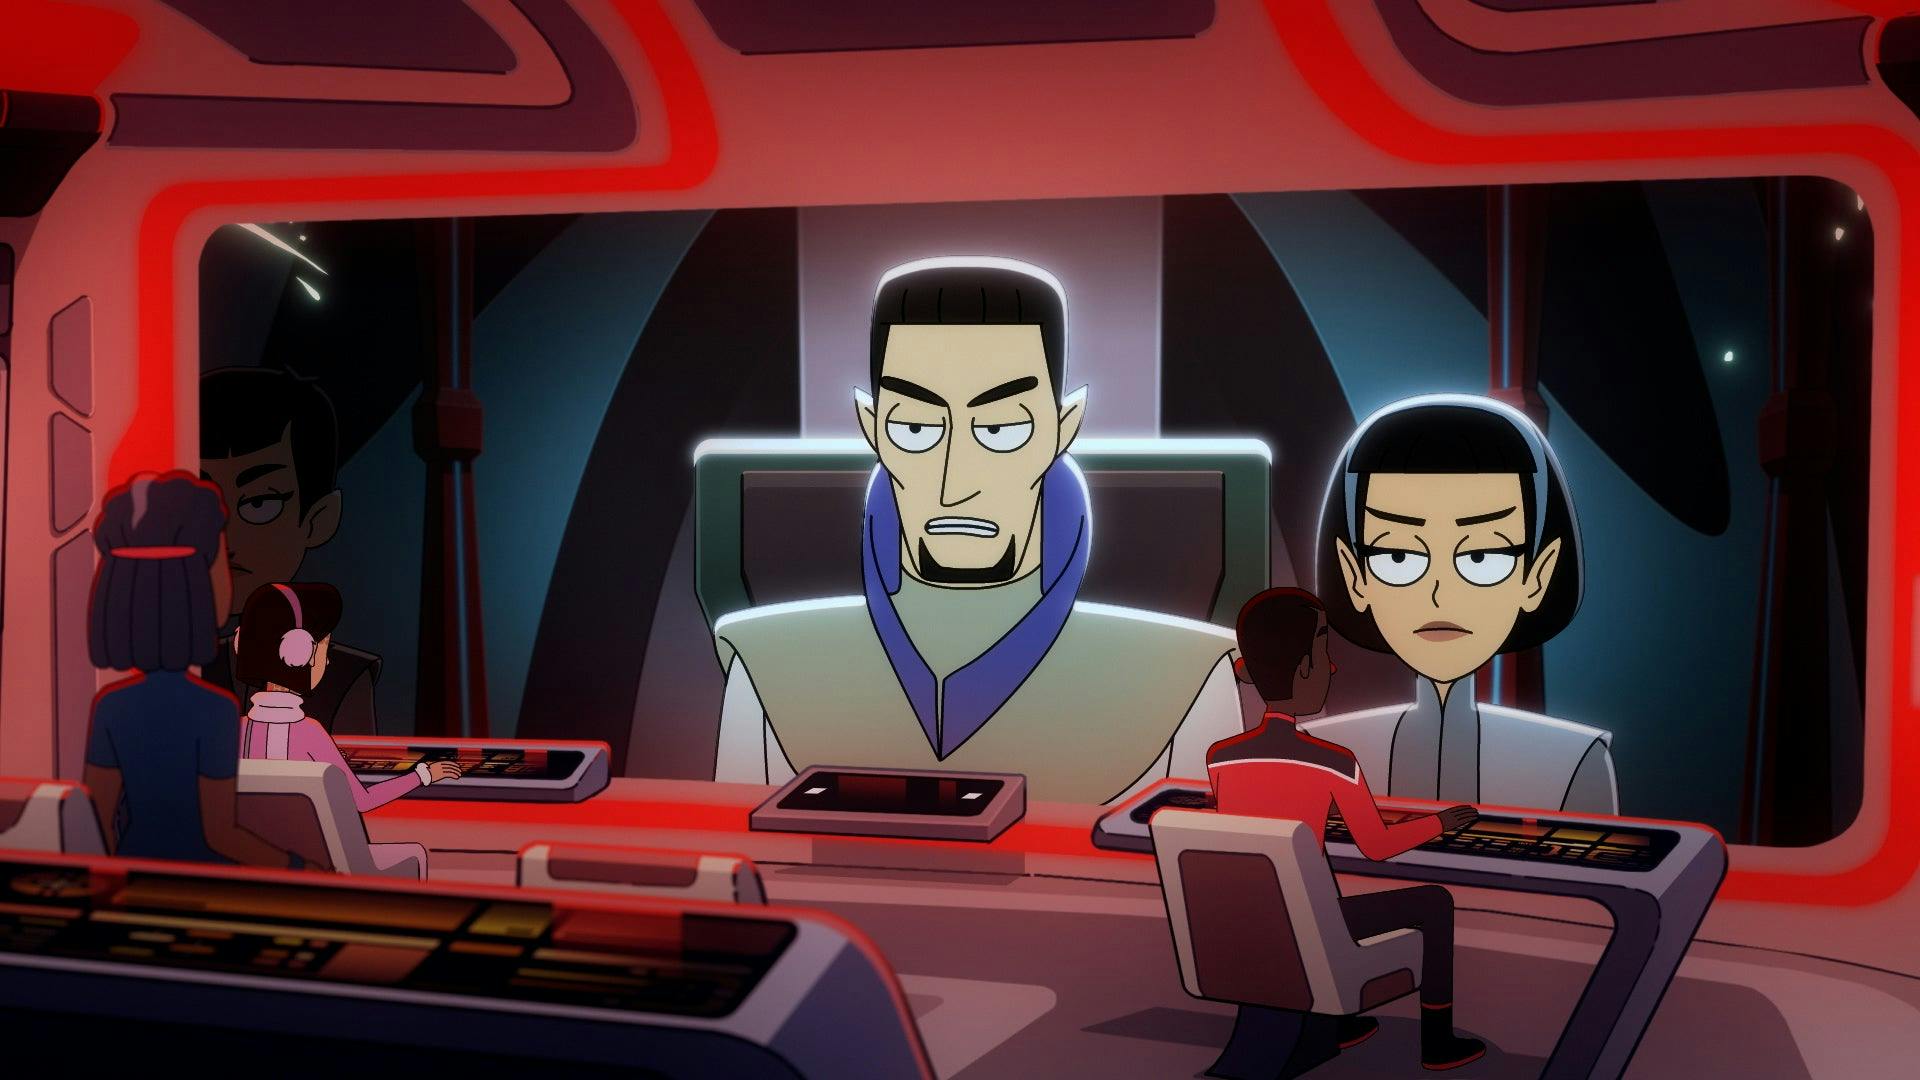 The Vulcans speaking to Captain Freeman in Star Trek: Lower Decks "wej Duj"